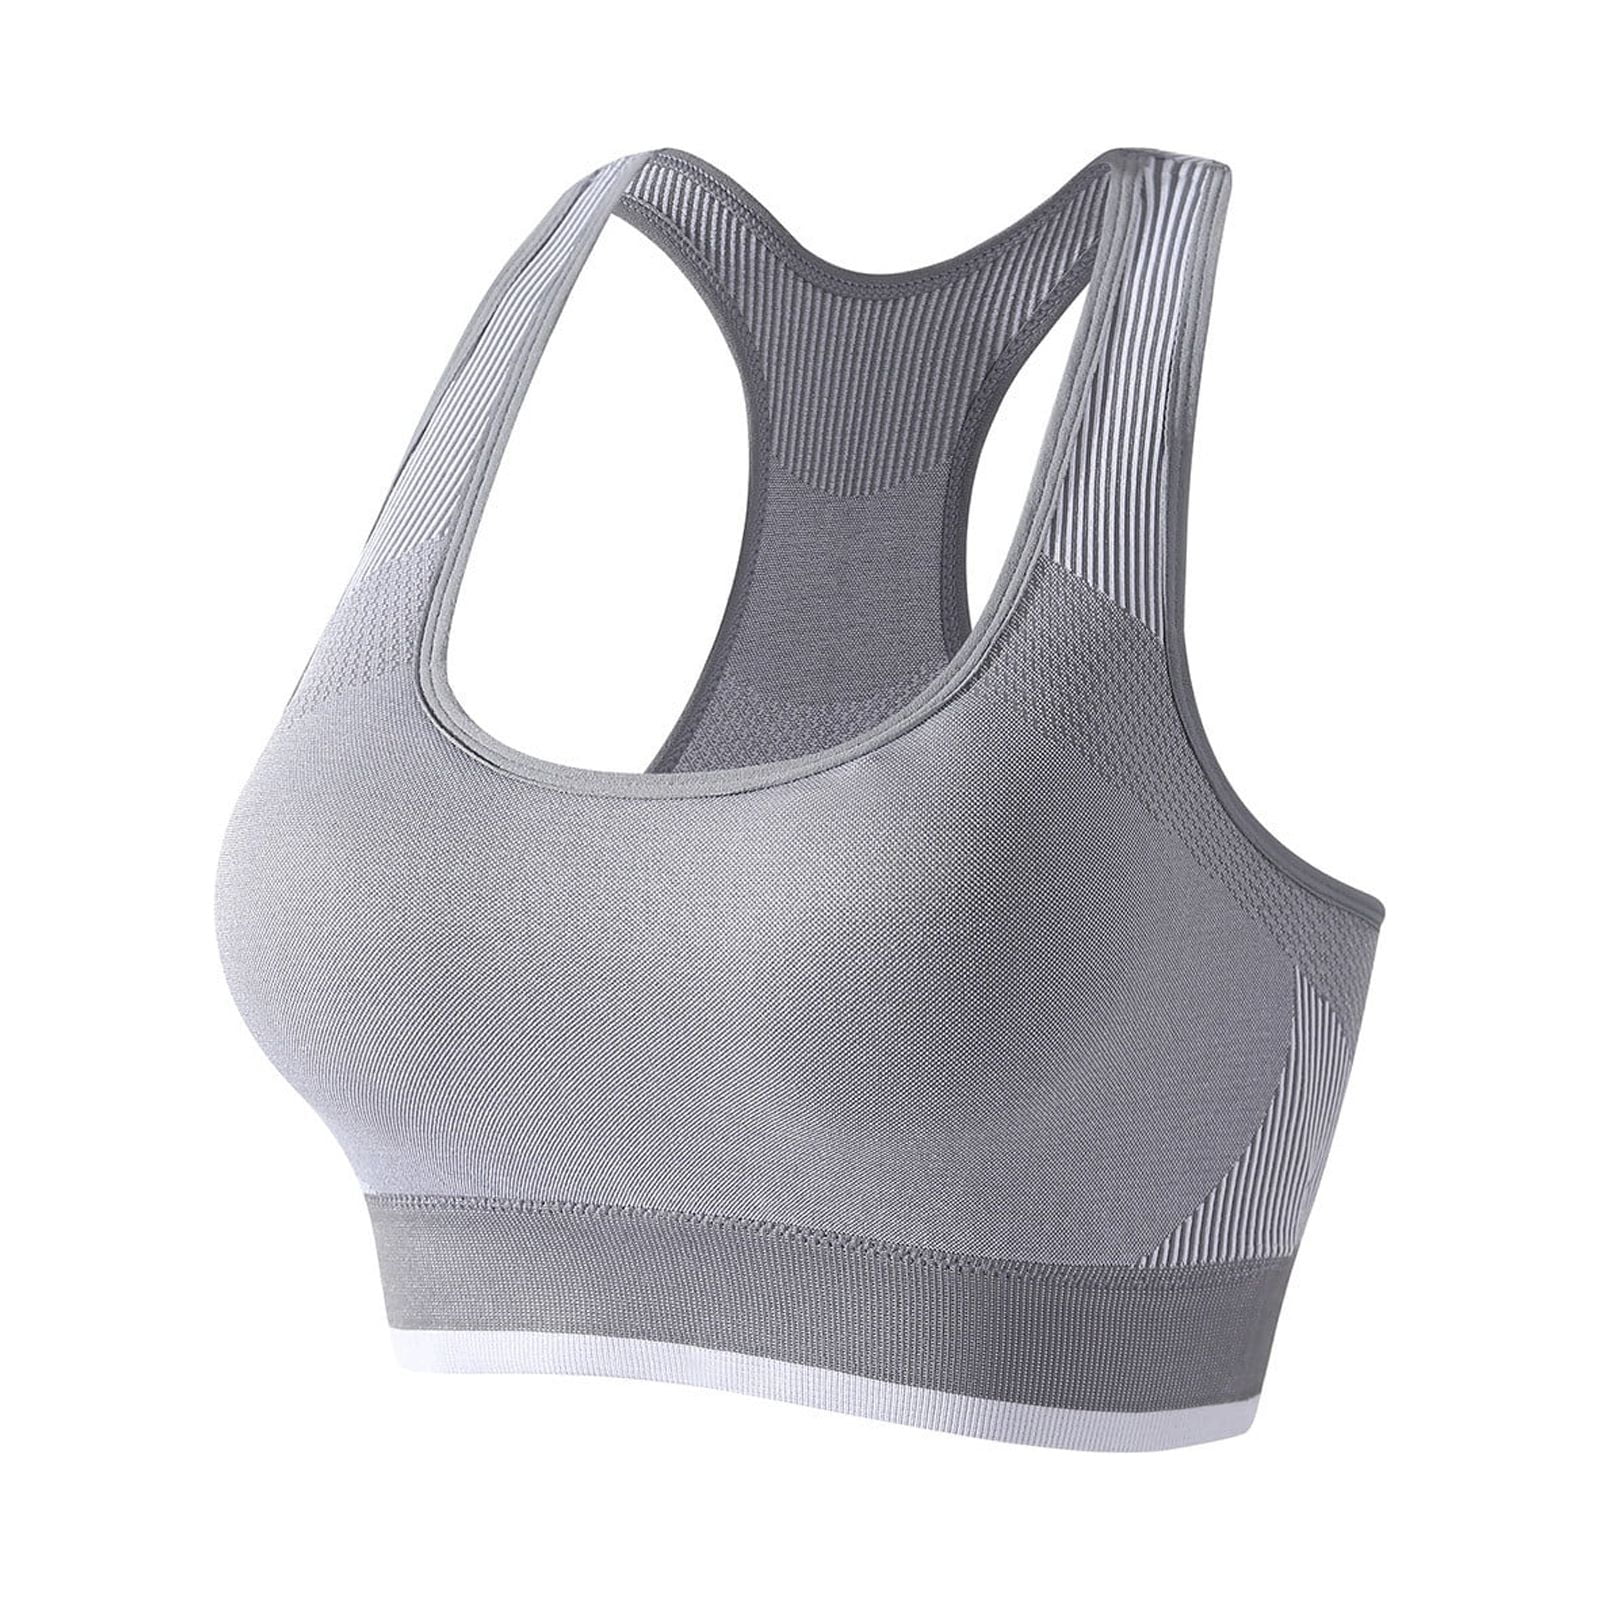 Buy Dermawear SB-1102 Non Padded Wire free Sports Bra - White Grey Online